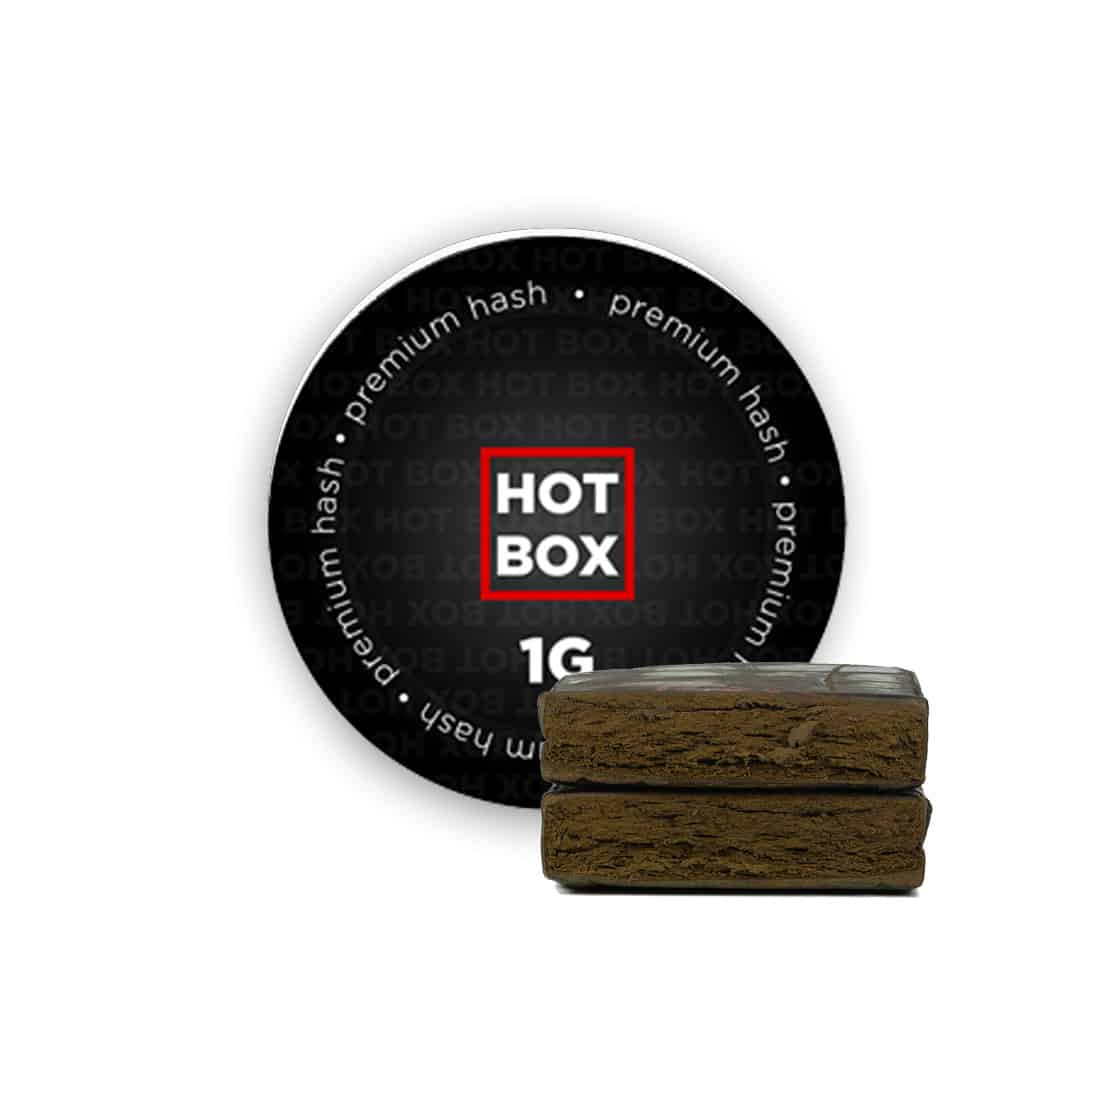 Hotbox hash